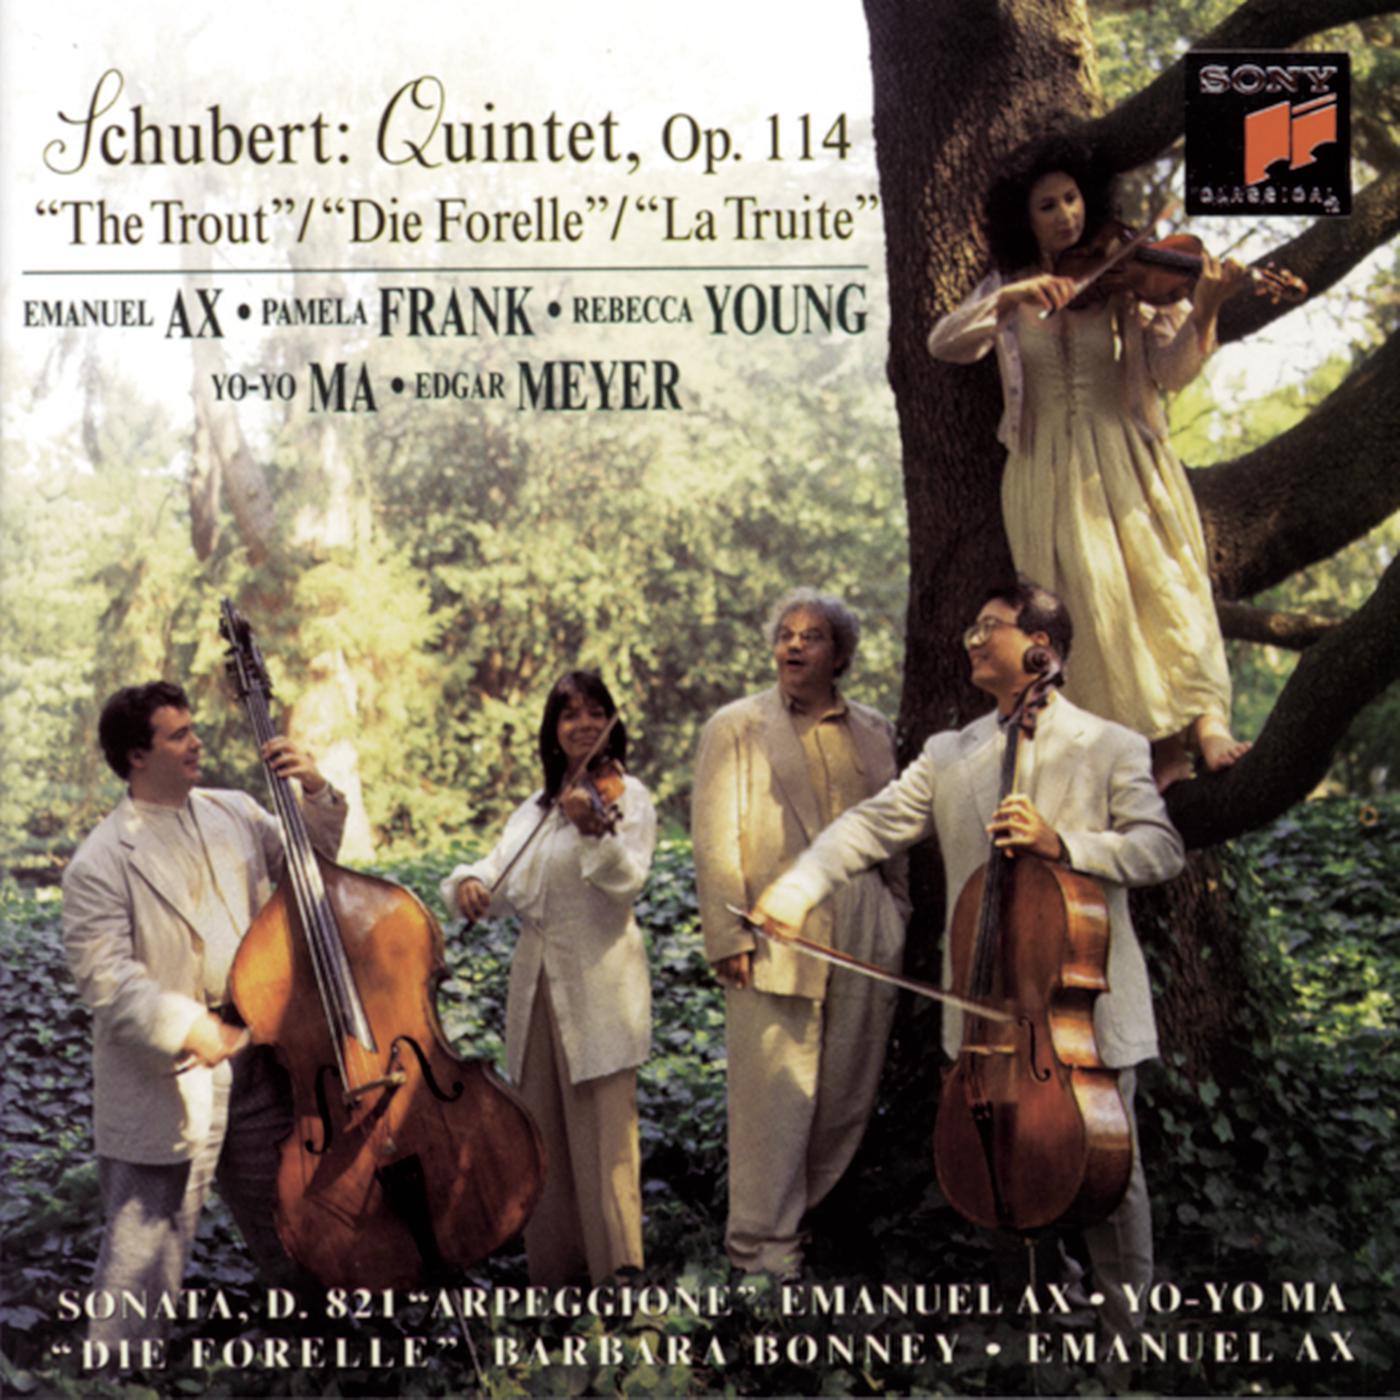 Piano Quintet in A Major, D. 667, Op. 114 "Trout": I. Allegro vivace